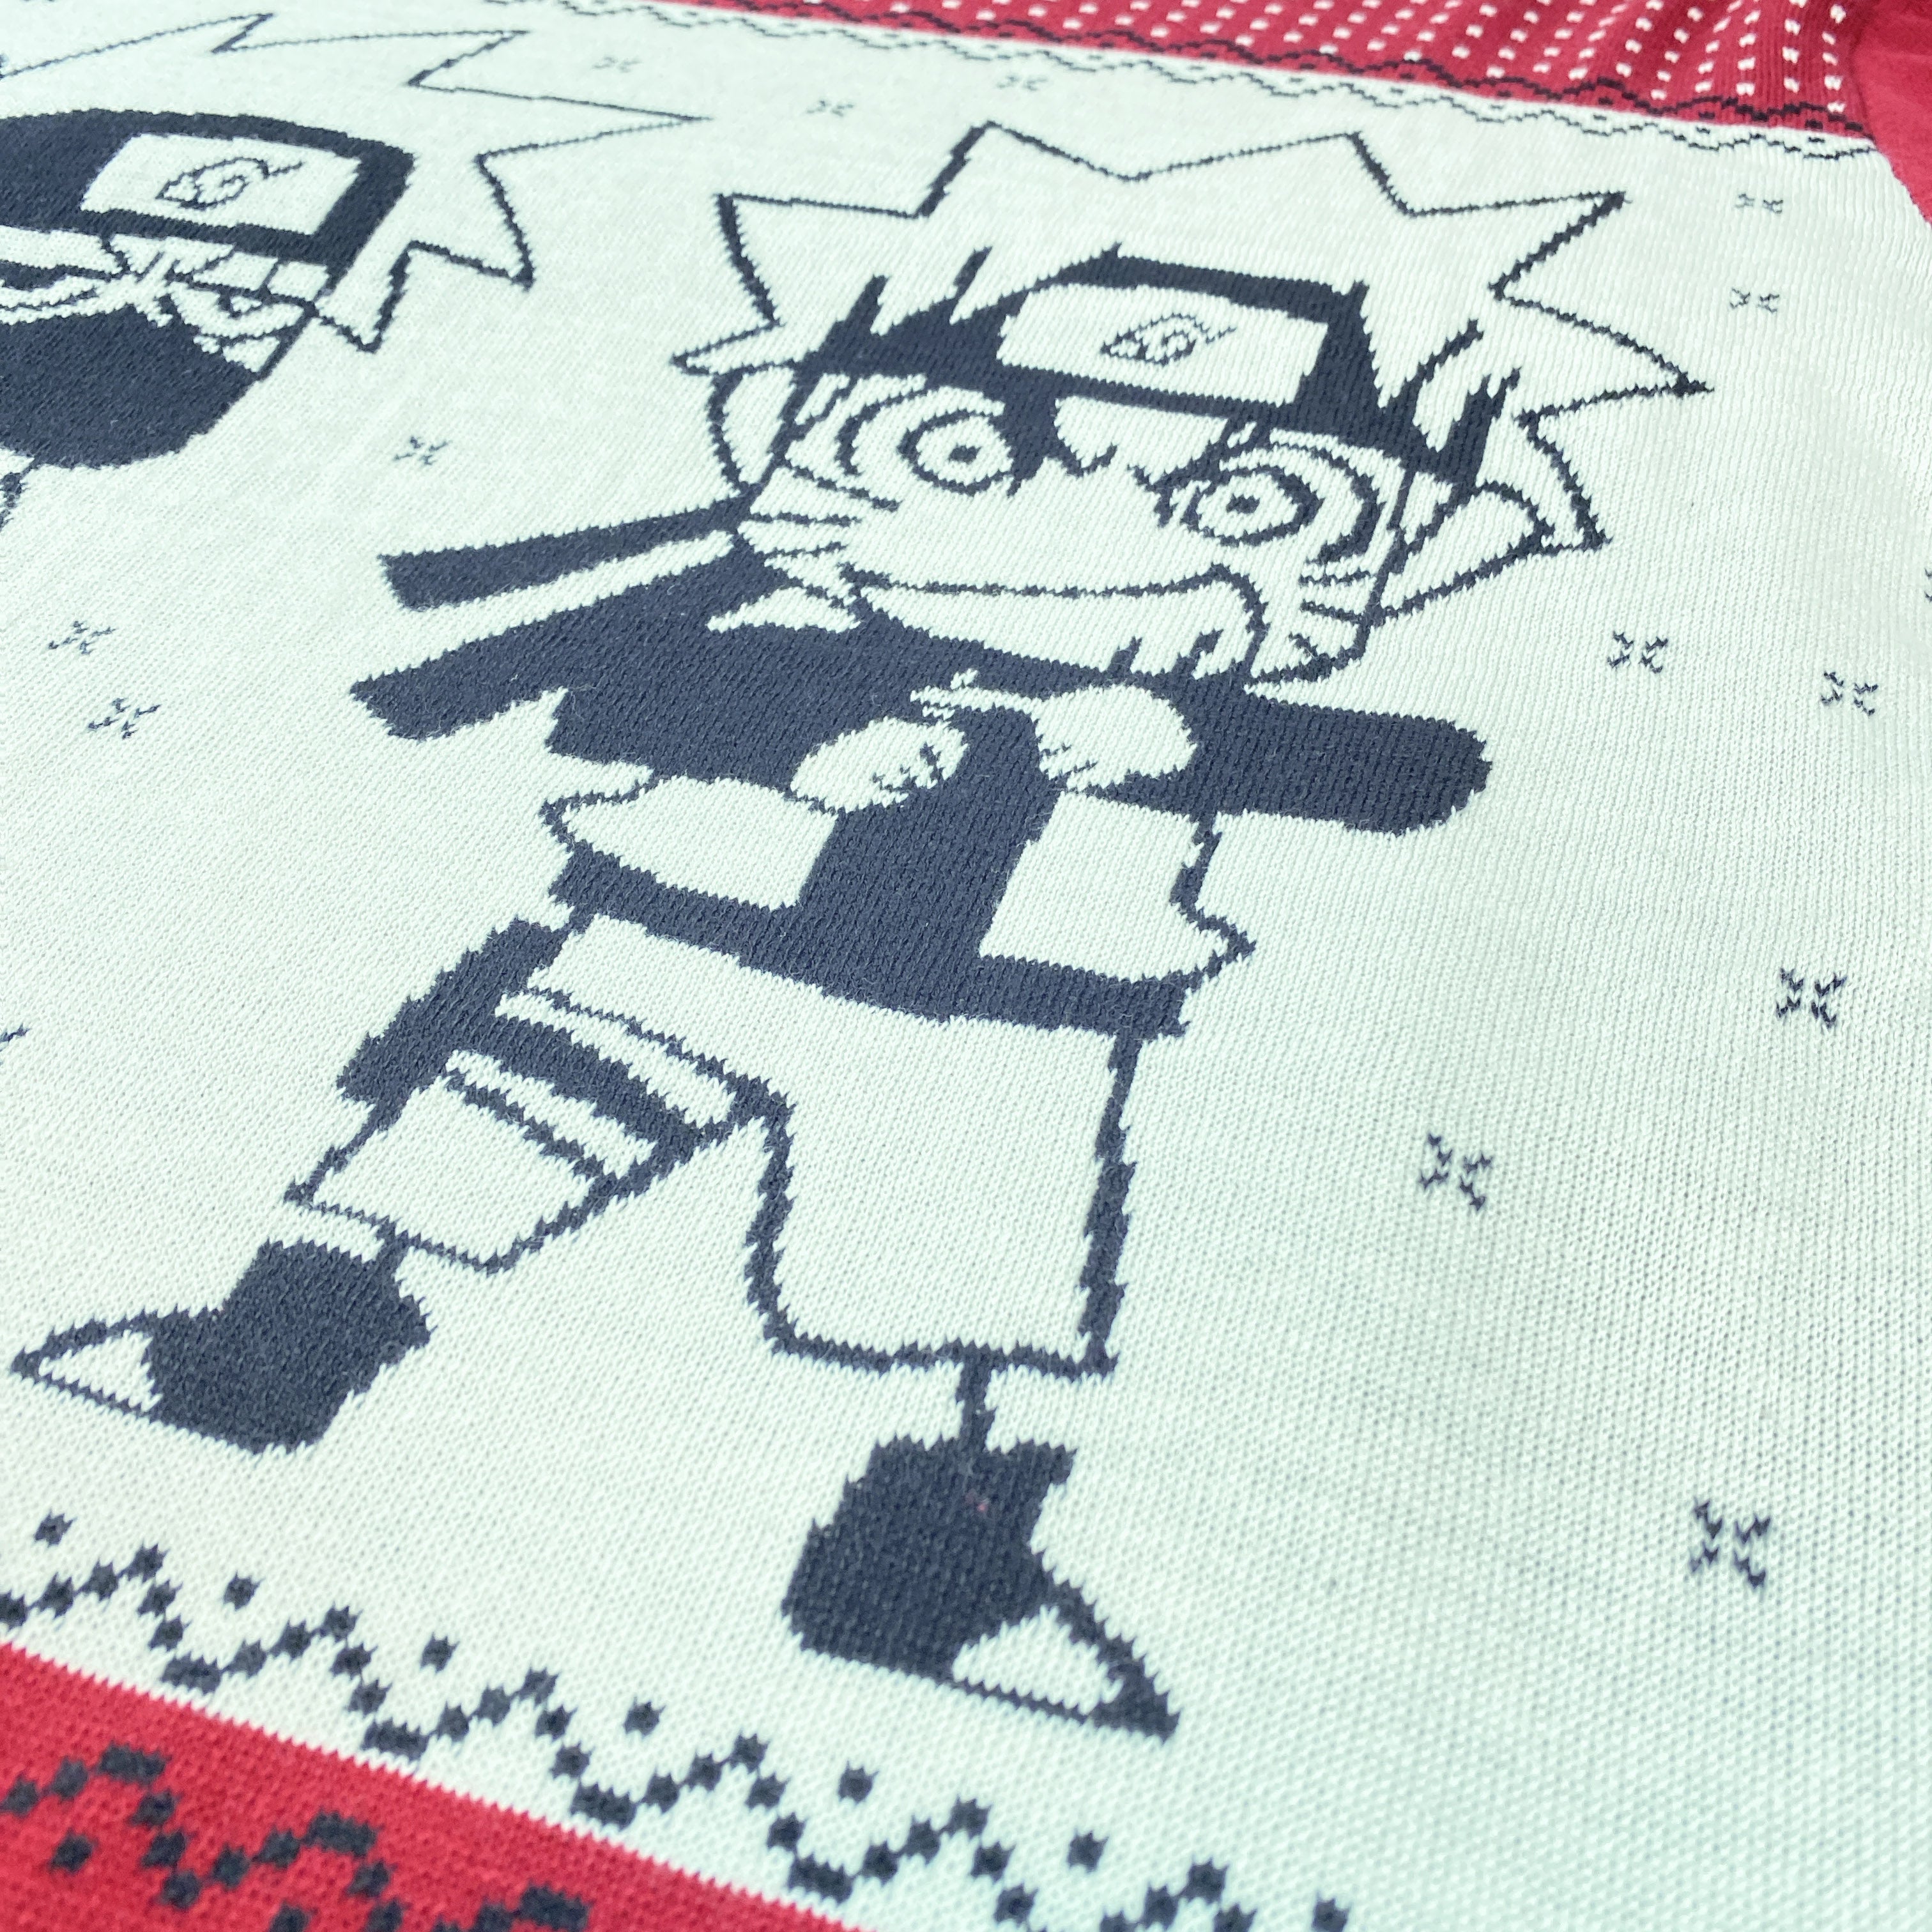 Naruto Shippuden - Naruto Kakashi Chibi Sweater - Crunchyroll Exclusive! image count 4